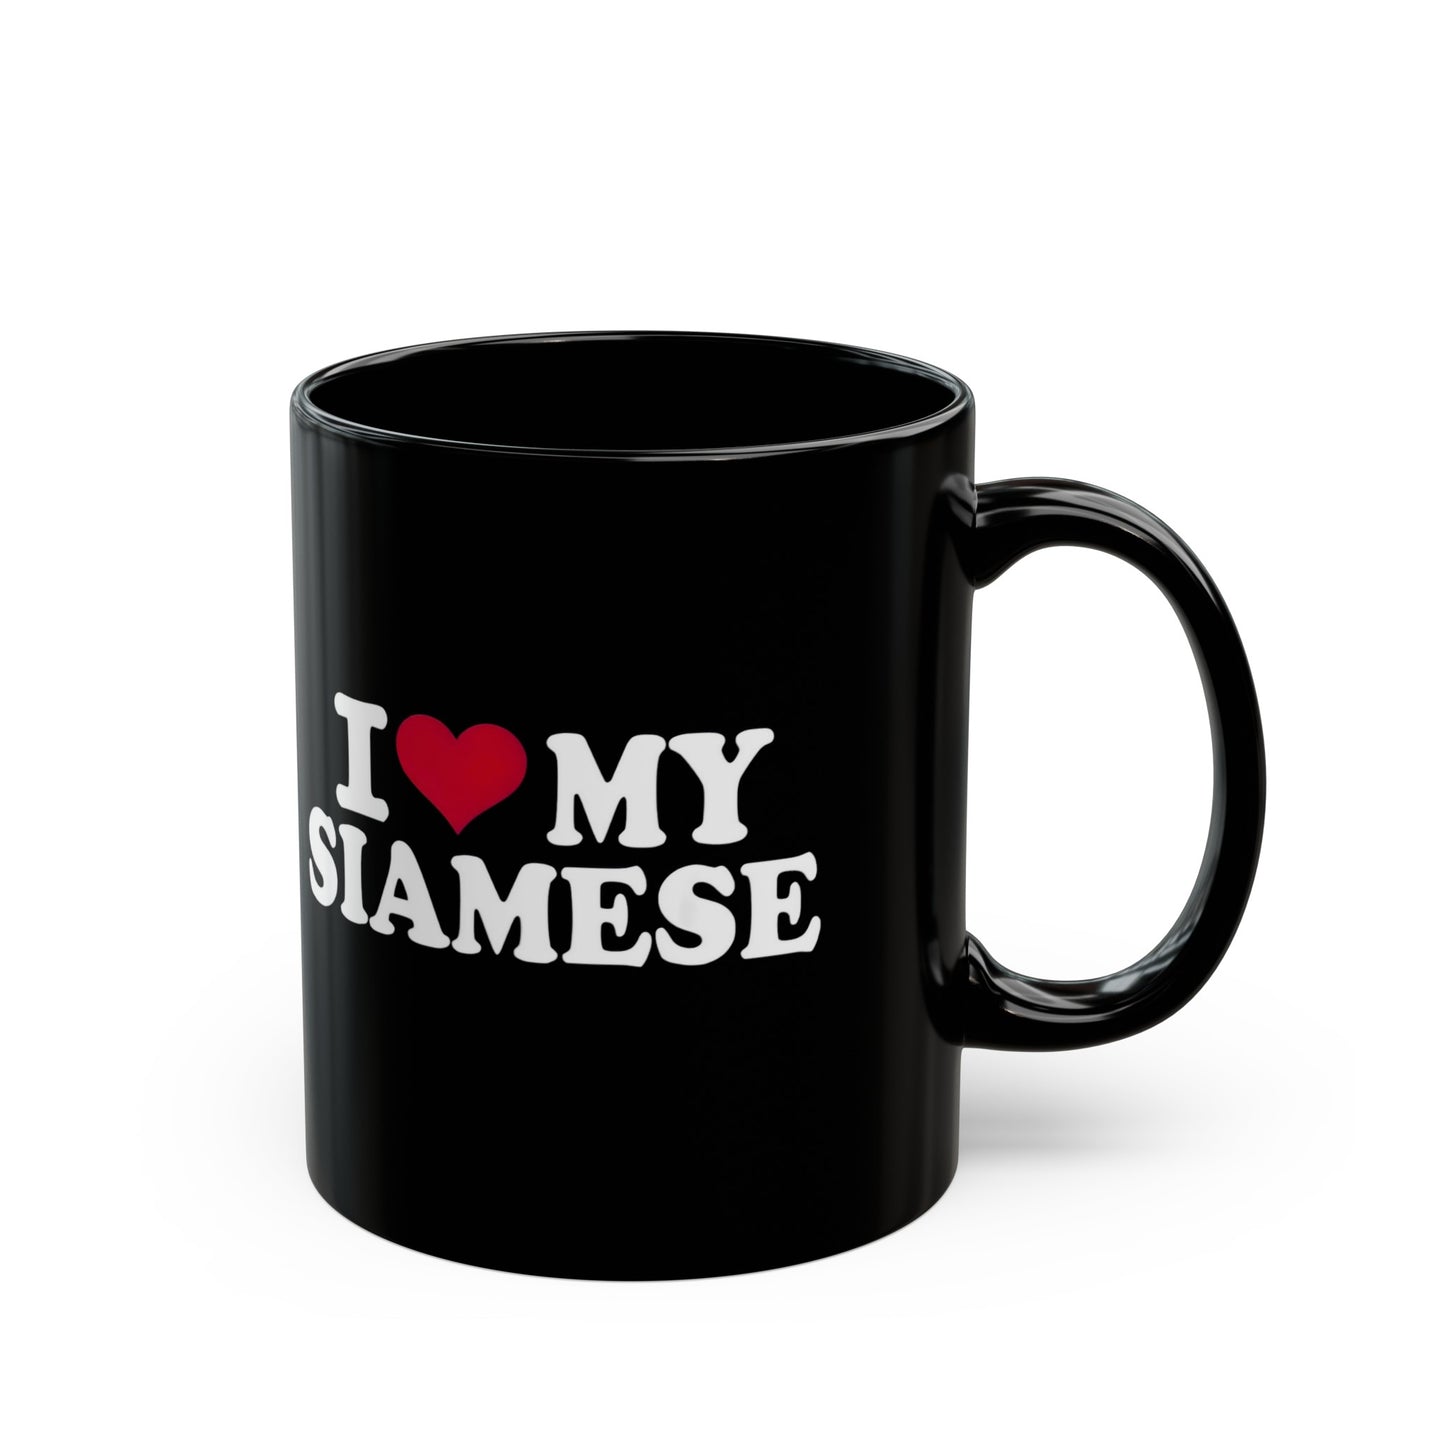 "I Love My Siamese Cat" Black Mug 11oz